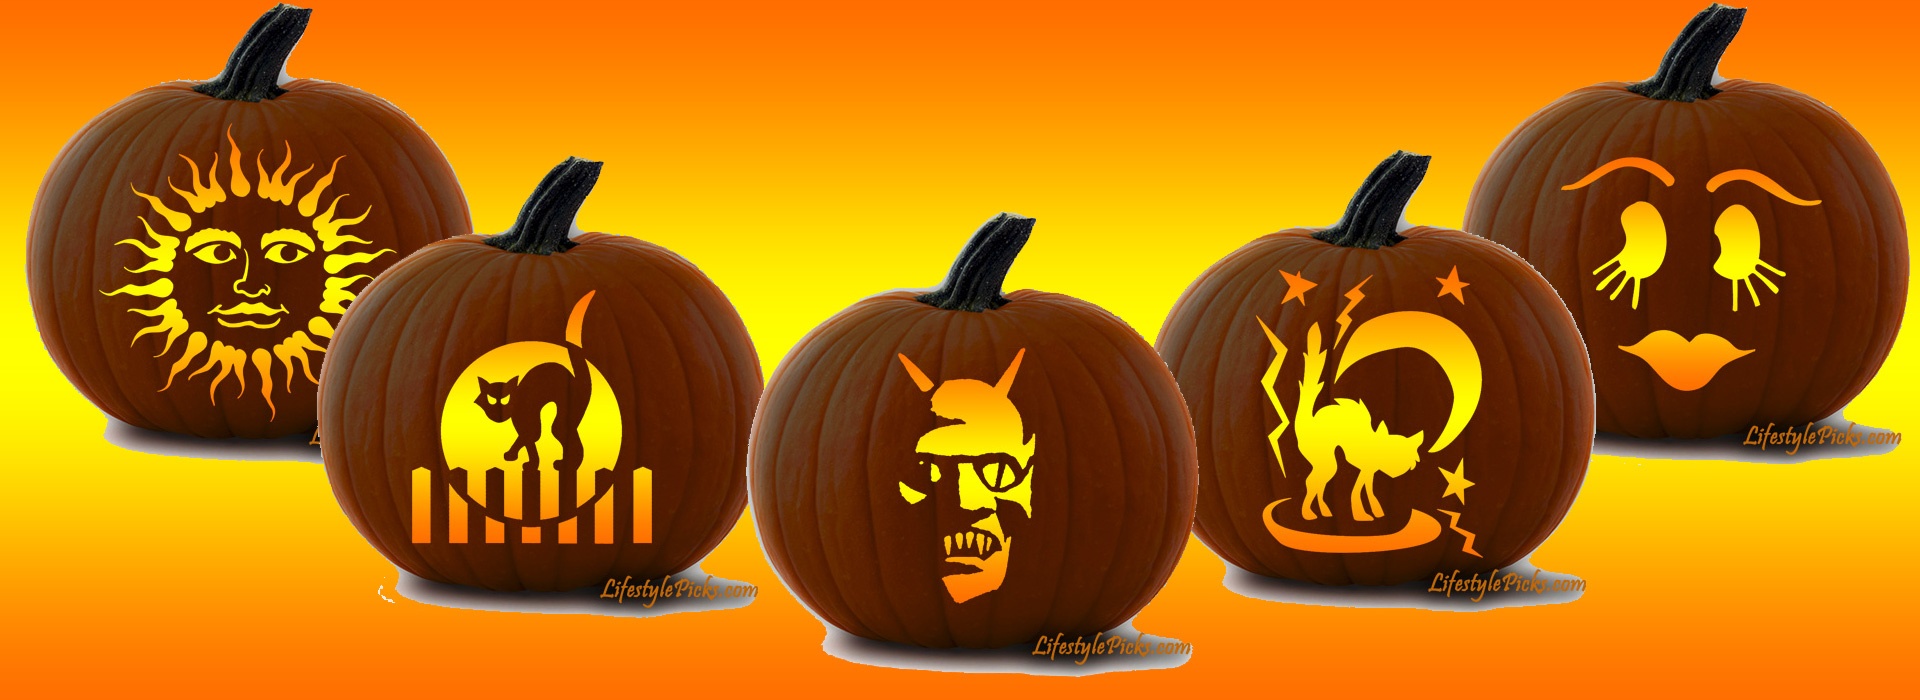 Free Pumpkin Carving Stencils - Pirate, Cat, Aztec Sun, Michael - Free Printable Pumpkin Carving Stencils